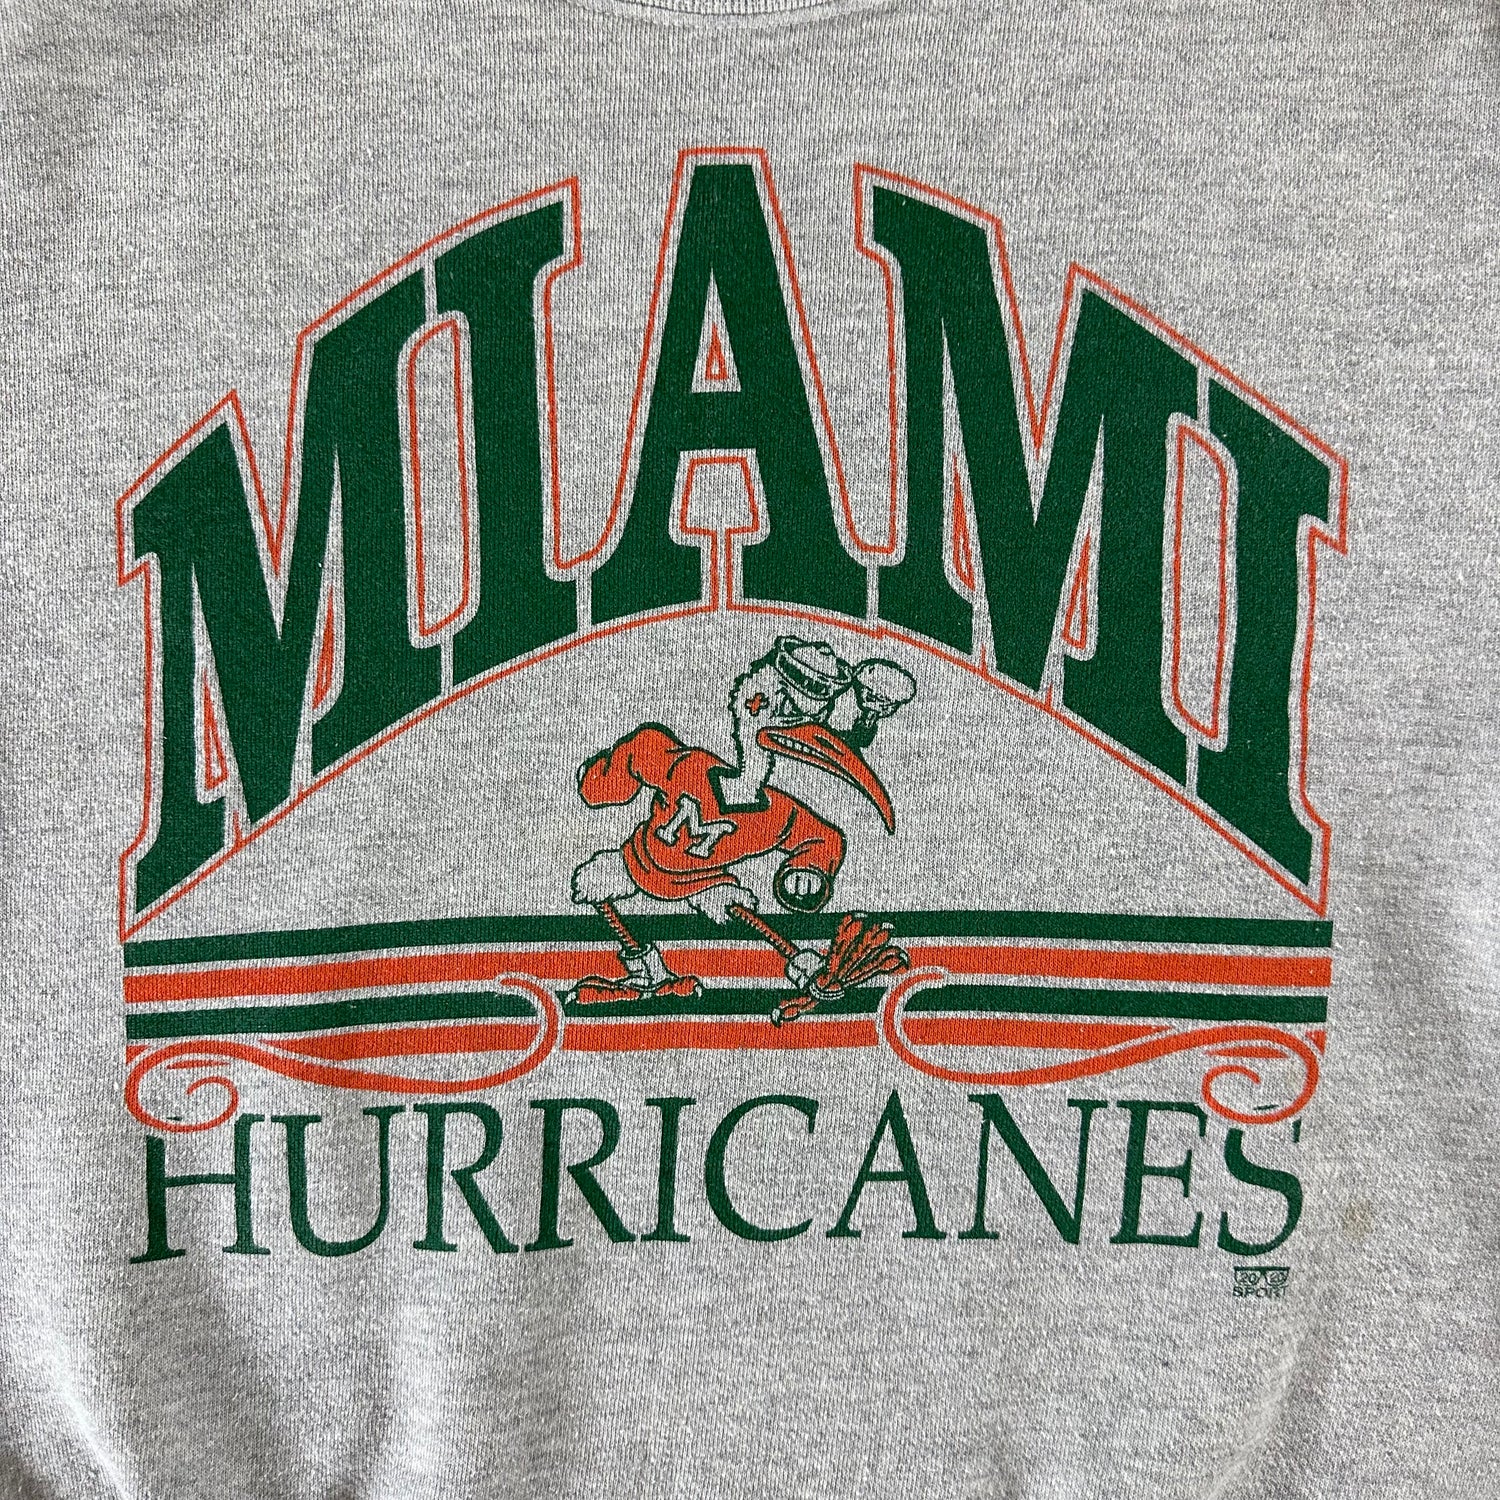 Vintage 1990s Miami Hurricanes Sweatshirt size Medium